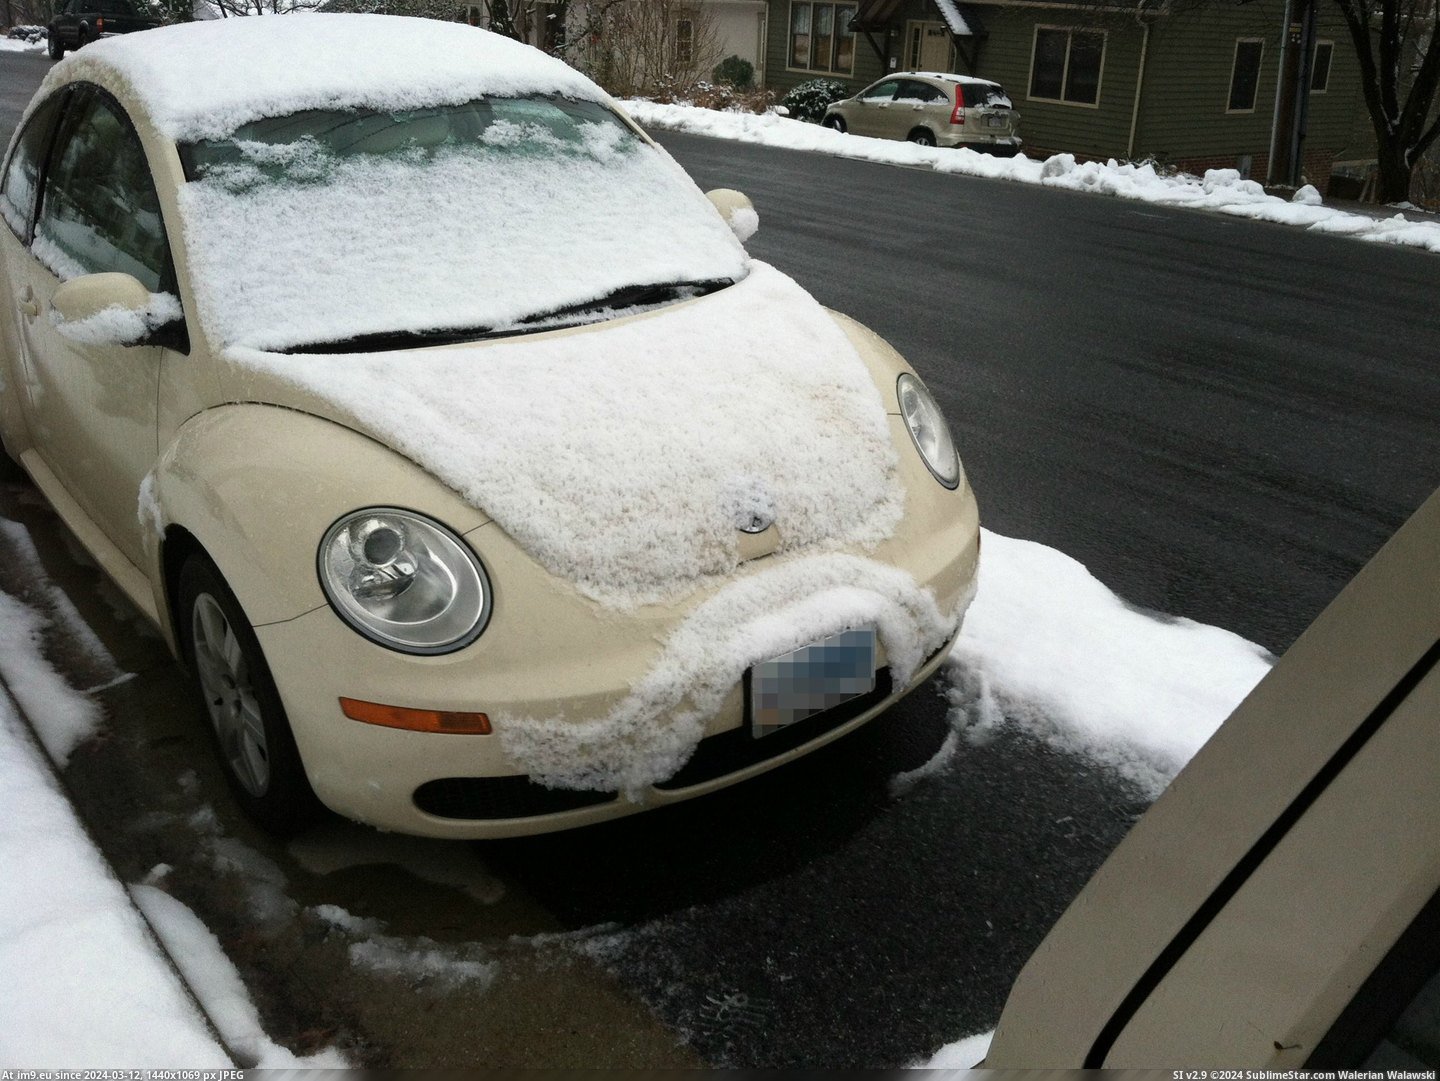 #Car #Mustache #Snow [Mildlyinteresting] This car has a mustache made of snow Pic. (Obraz z album My r/MILDLYINTERESTING favs))